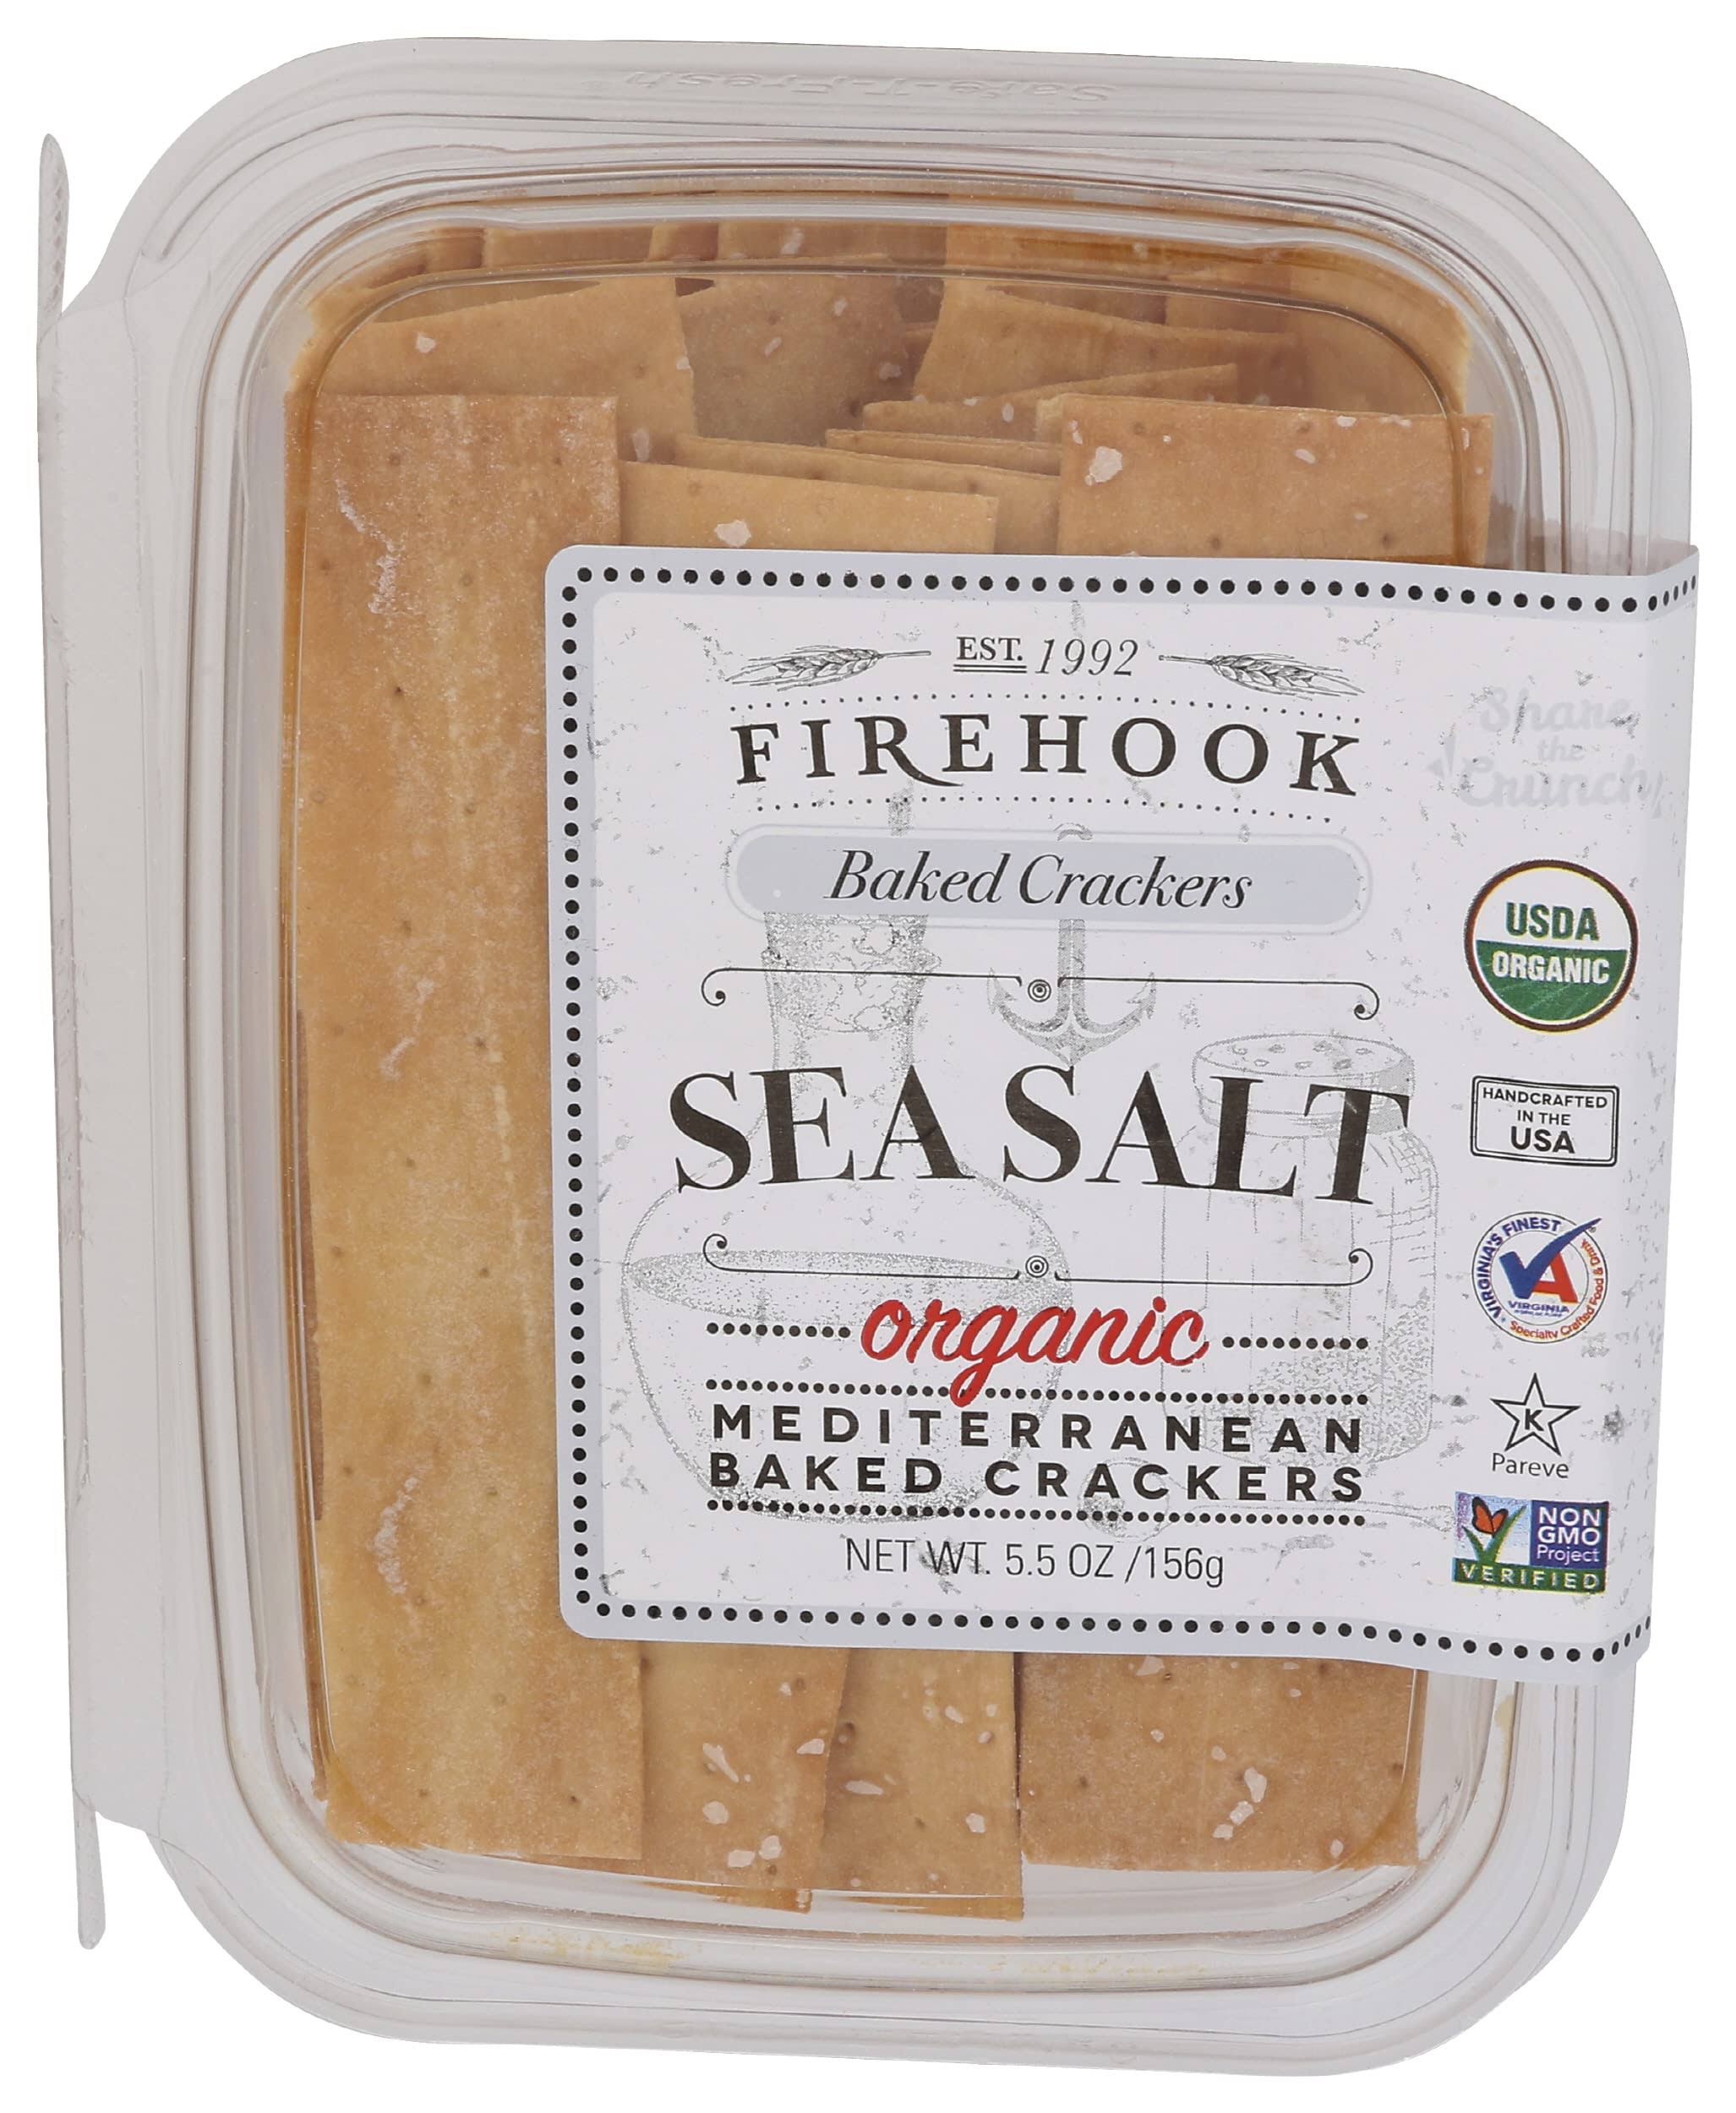 Firehook All Natural Artisan Baked Crackers - Sea Salt, 5.5oz